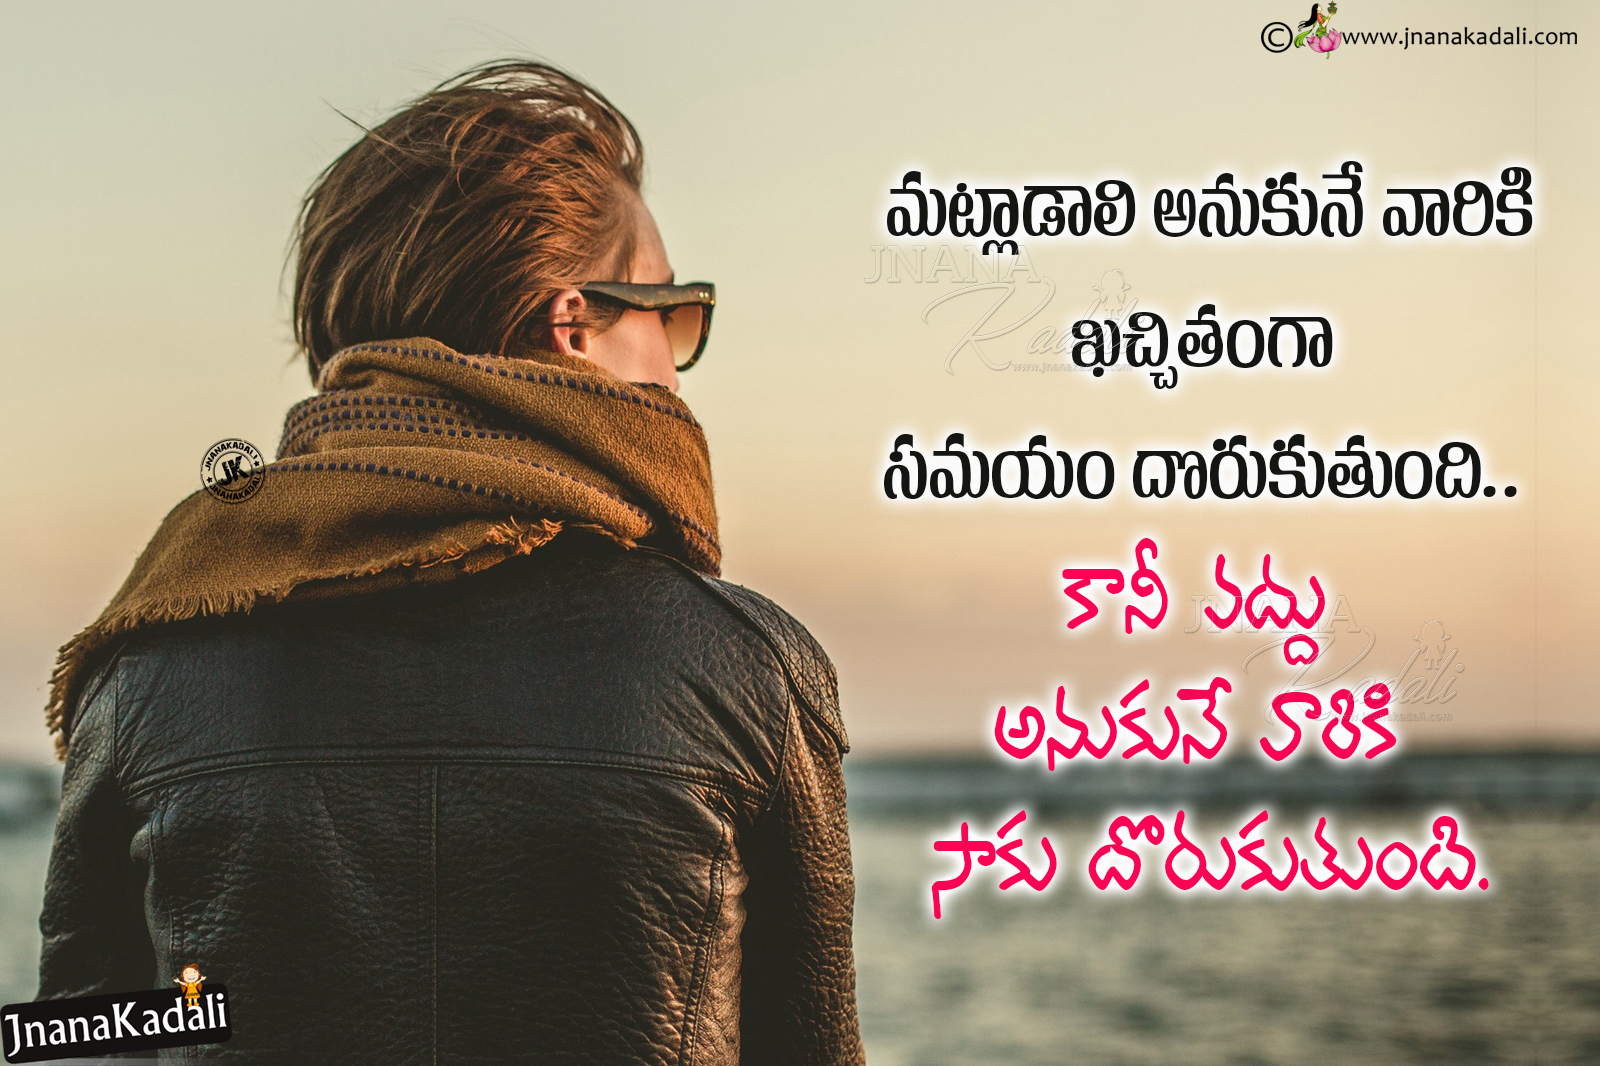 Best Telugu Relationship Quotes images-Best Telugu inspirational quotes